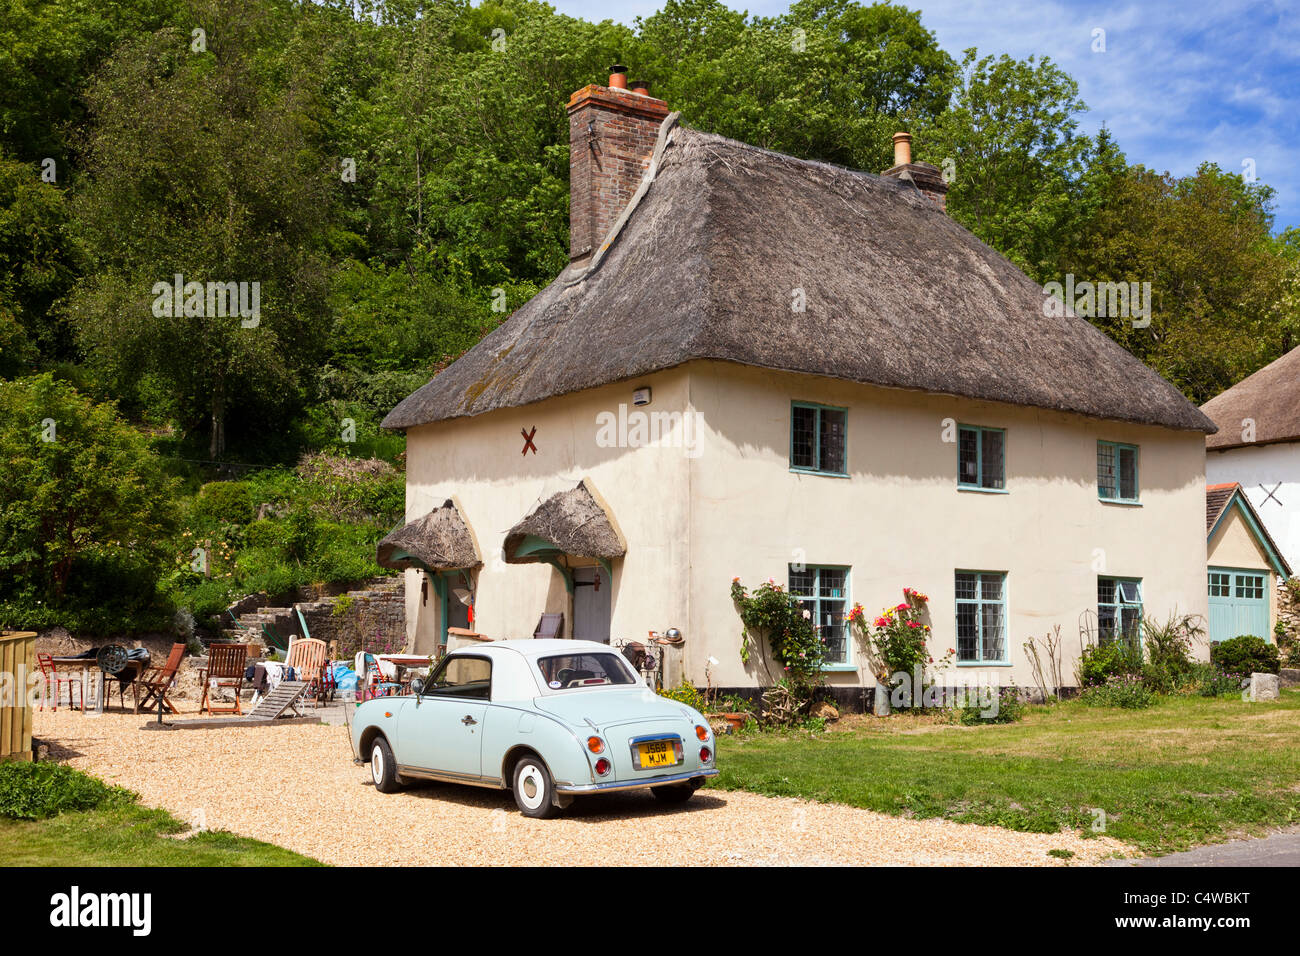 Casa de paja Reino Unido cottage y coches de época, Milton Abbas, Dorset, Inglaterra, Reino Unido. Foto de stock